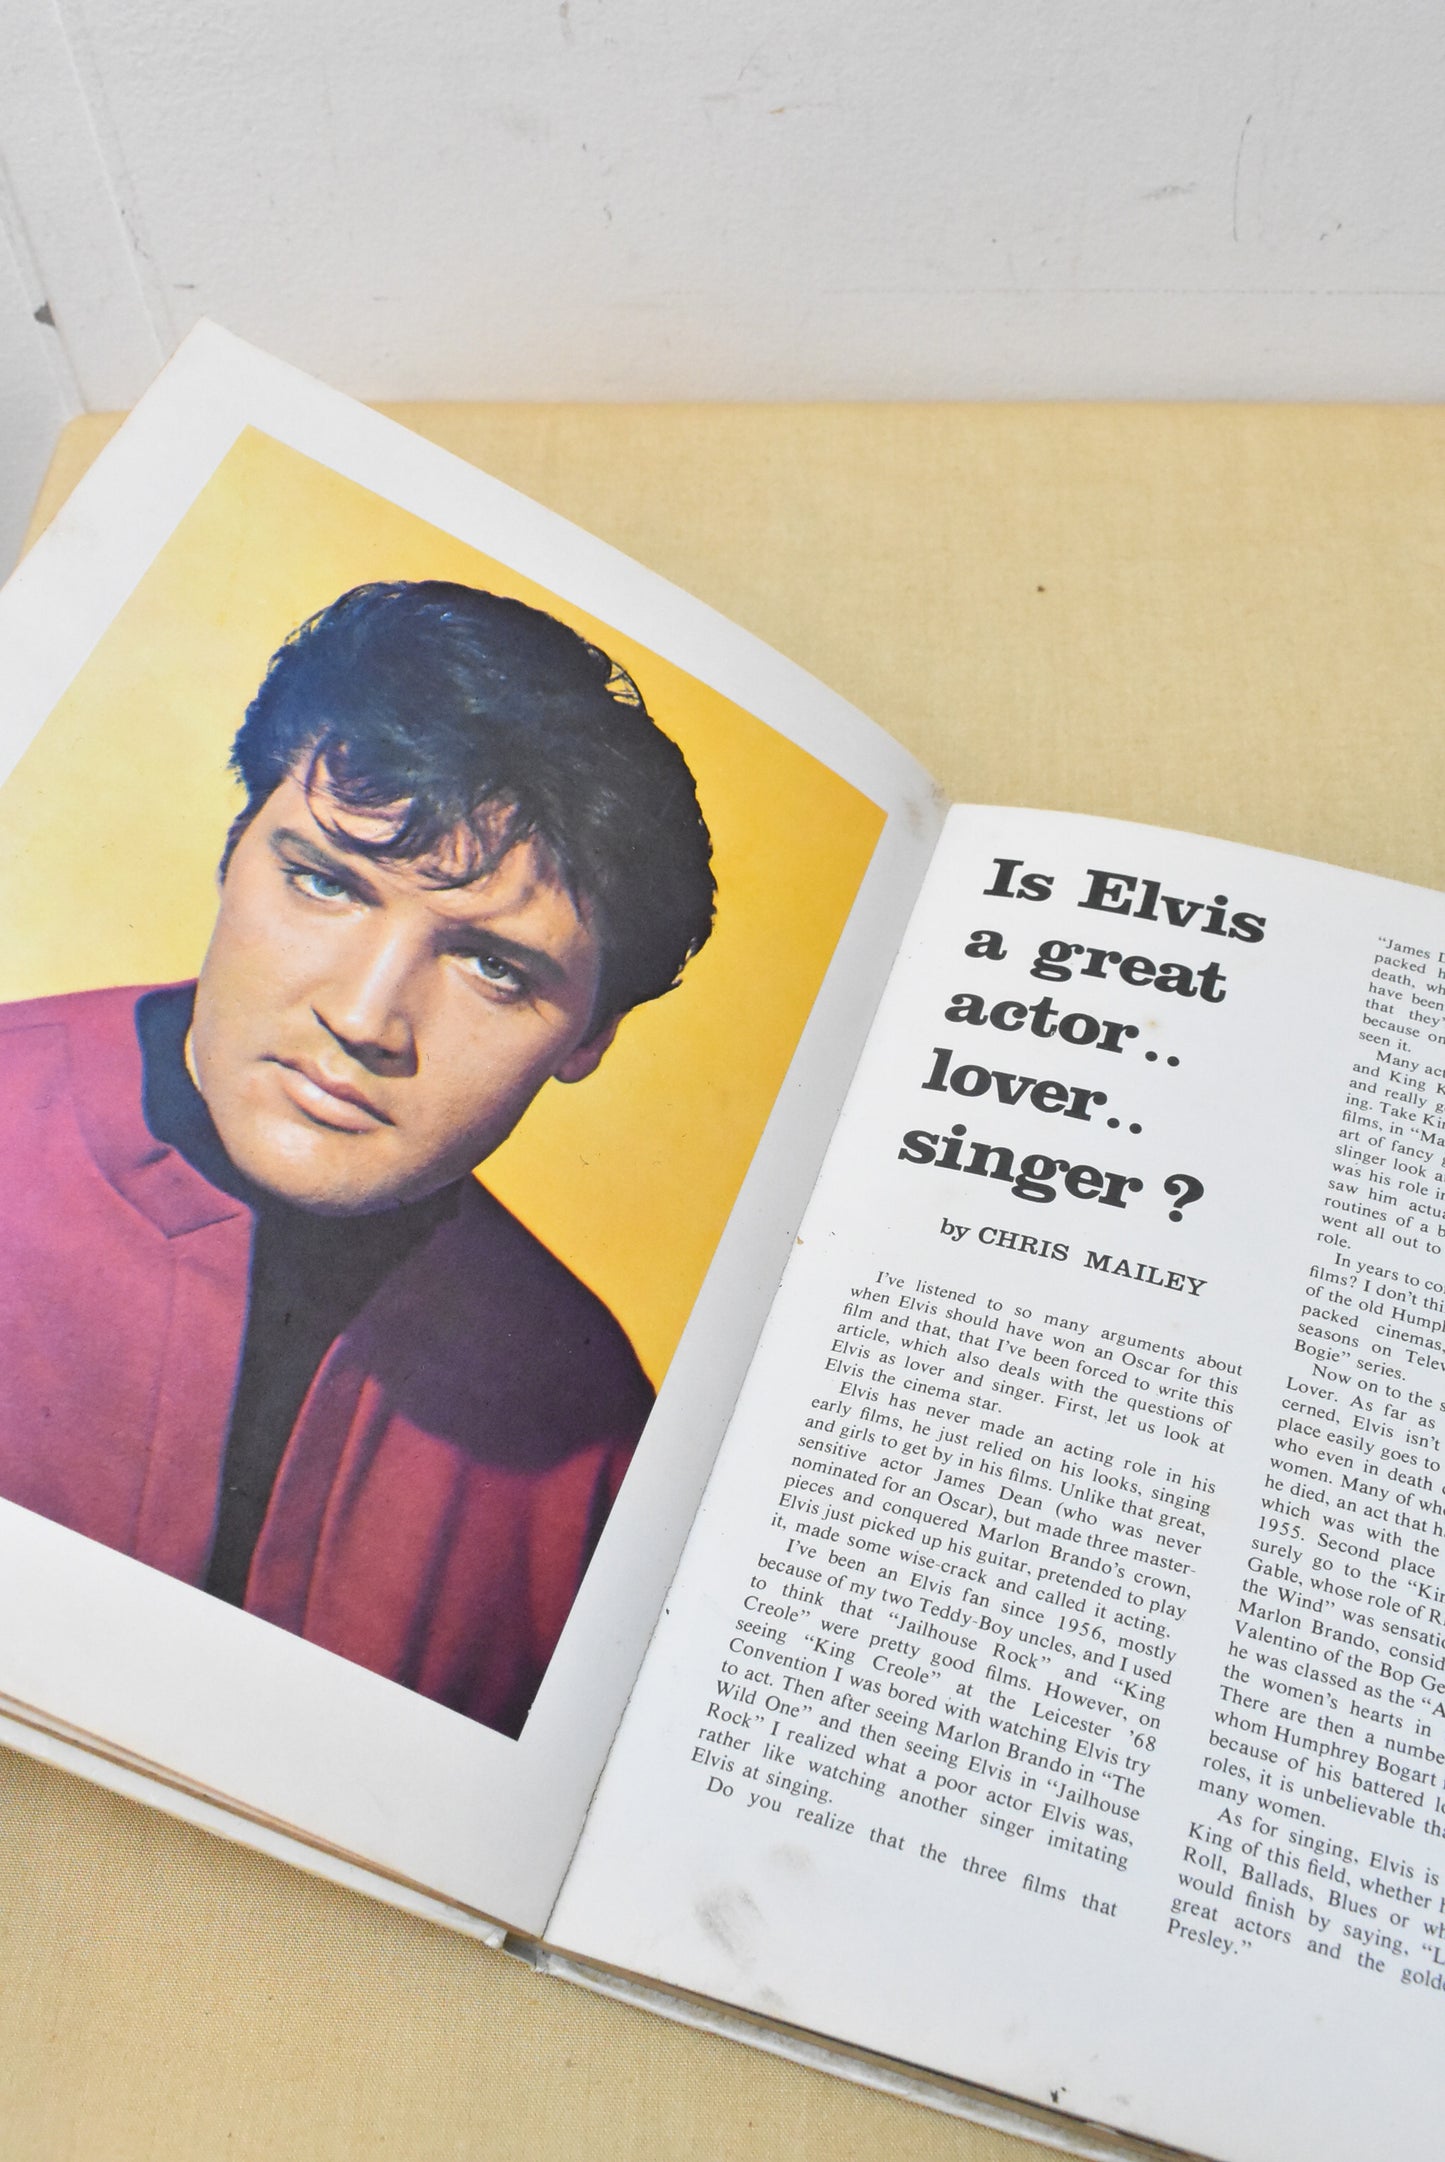 5x Vintage Elvis Special books